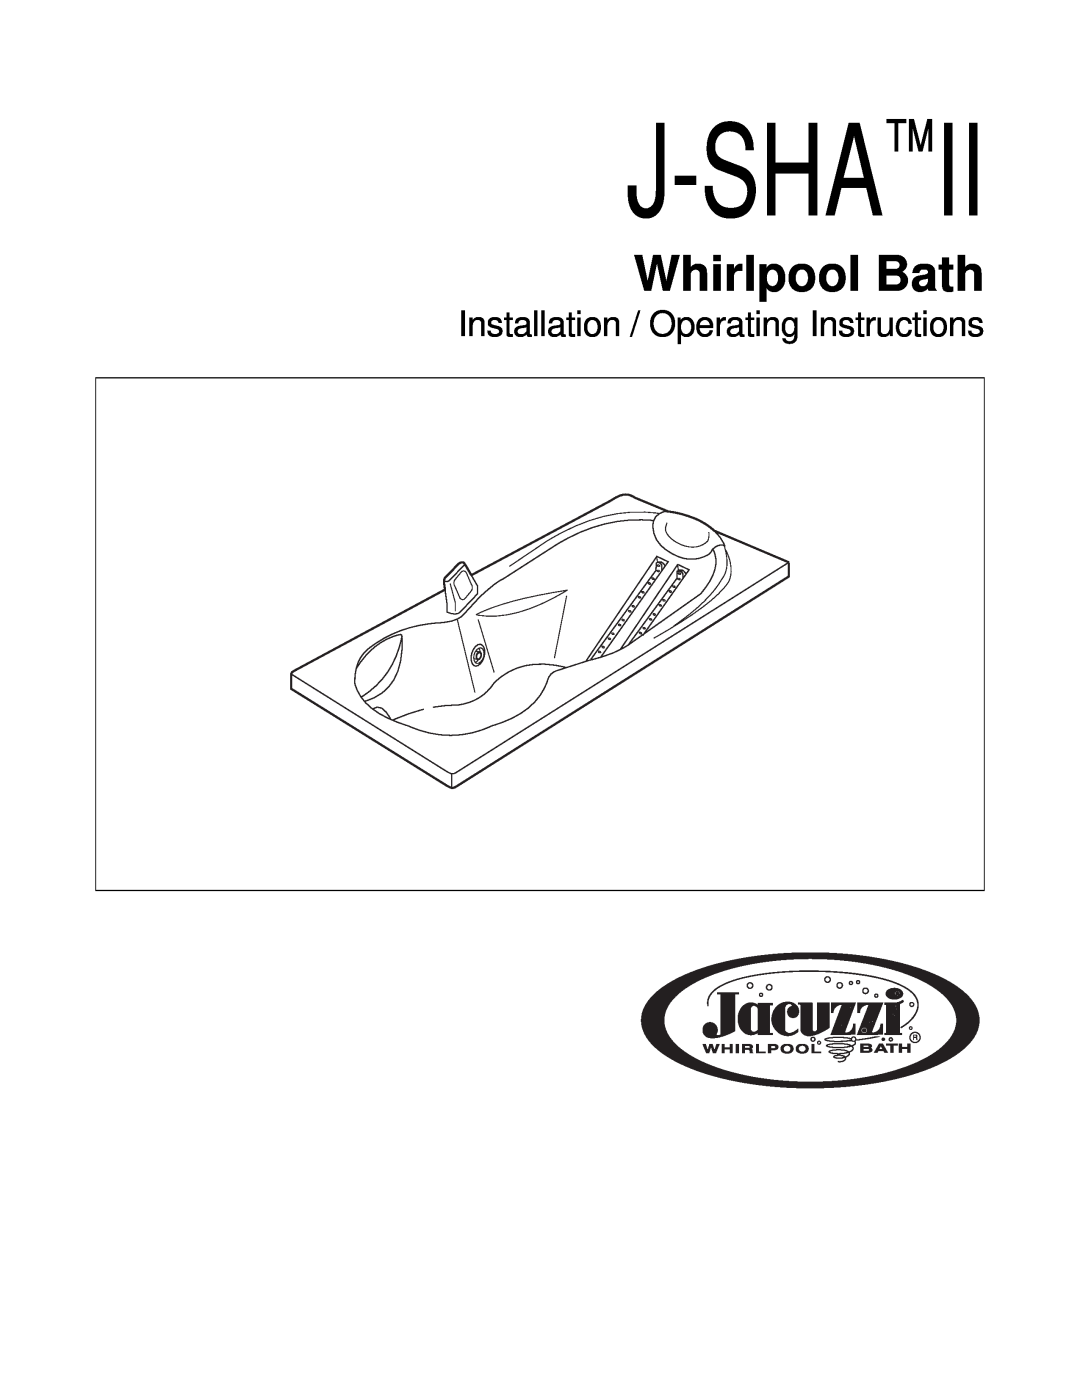 Jacuzzi J-SHA manual J-Shaii, Whirlpool Bath, Installation / Operating Instructions 